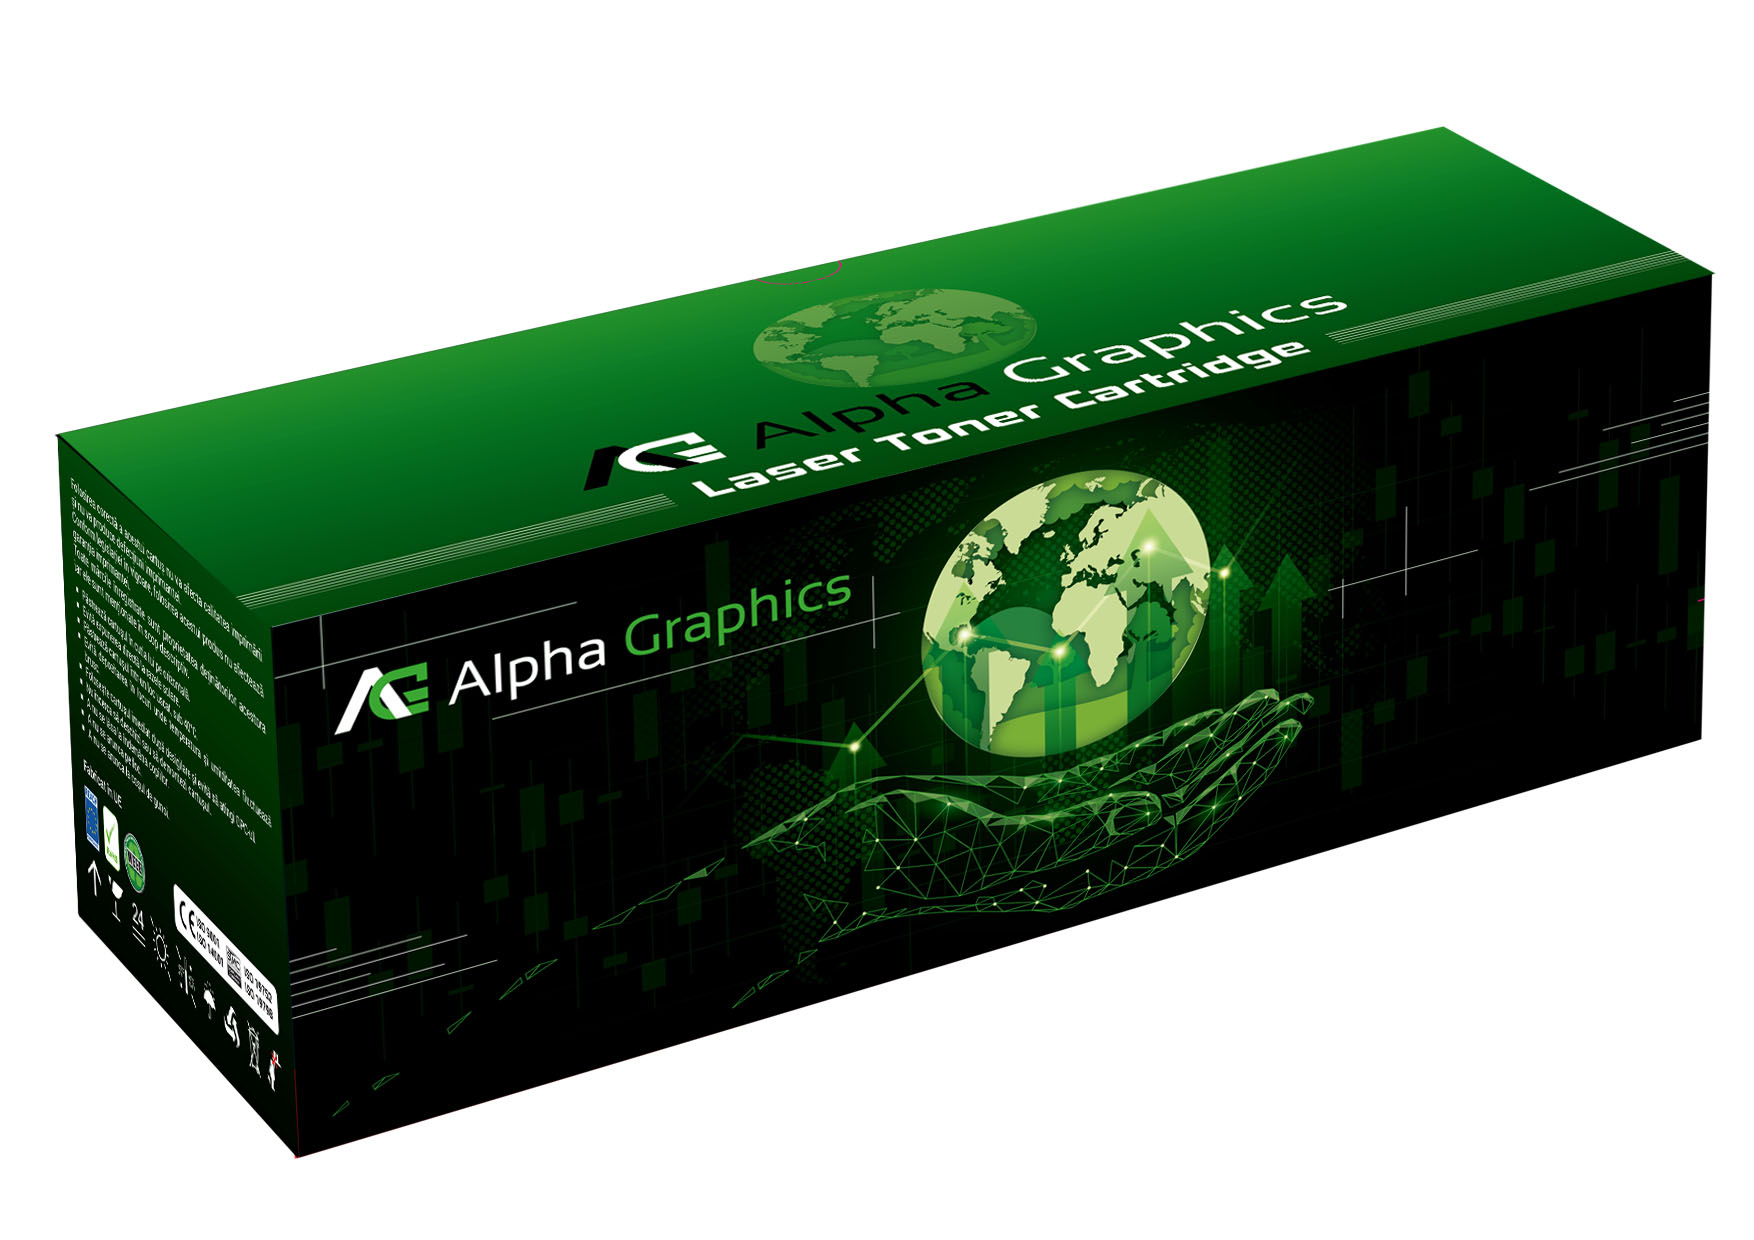 LEX C950/X950 Y Alpha Graphics Laser